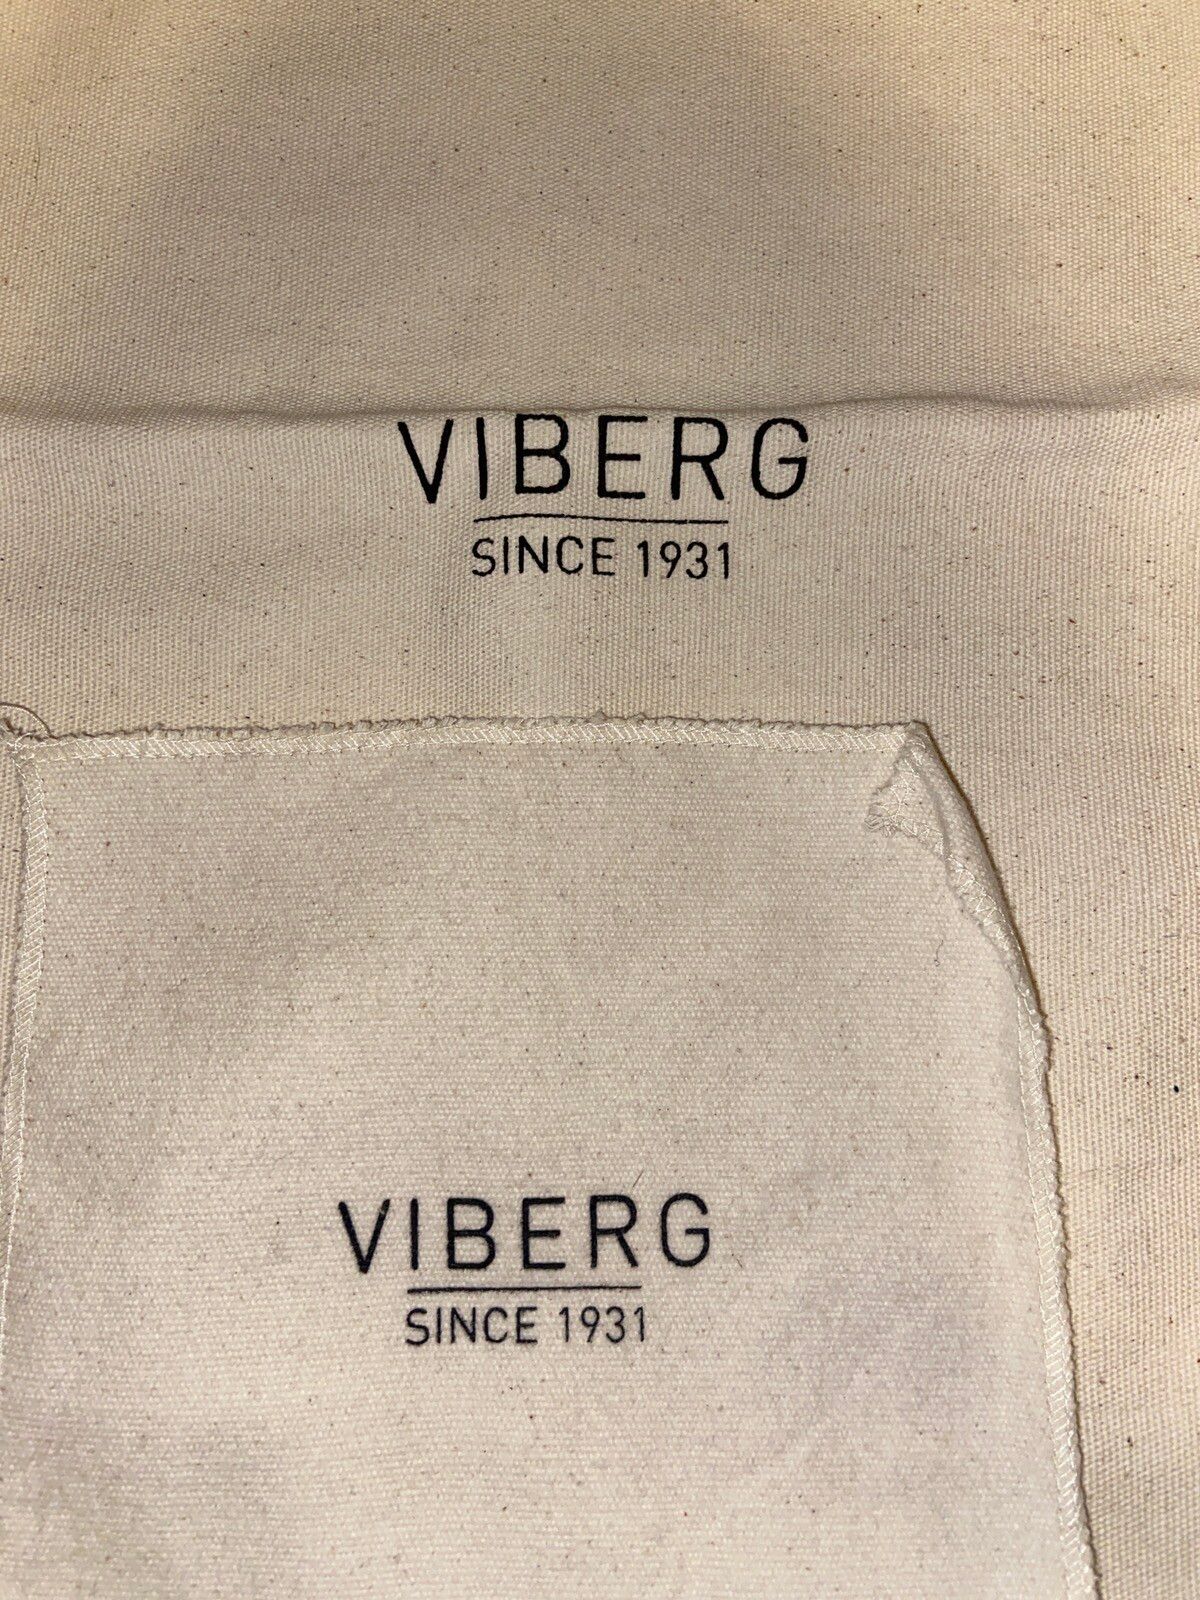 Viberg Viberg Black Leather Work Boots Size US 10 / EU 43 - 7 Preview